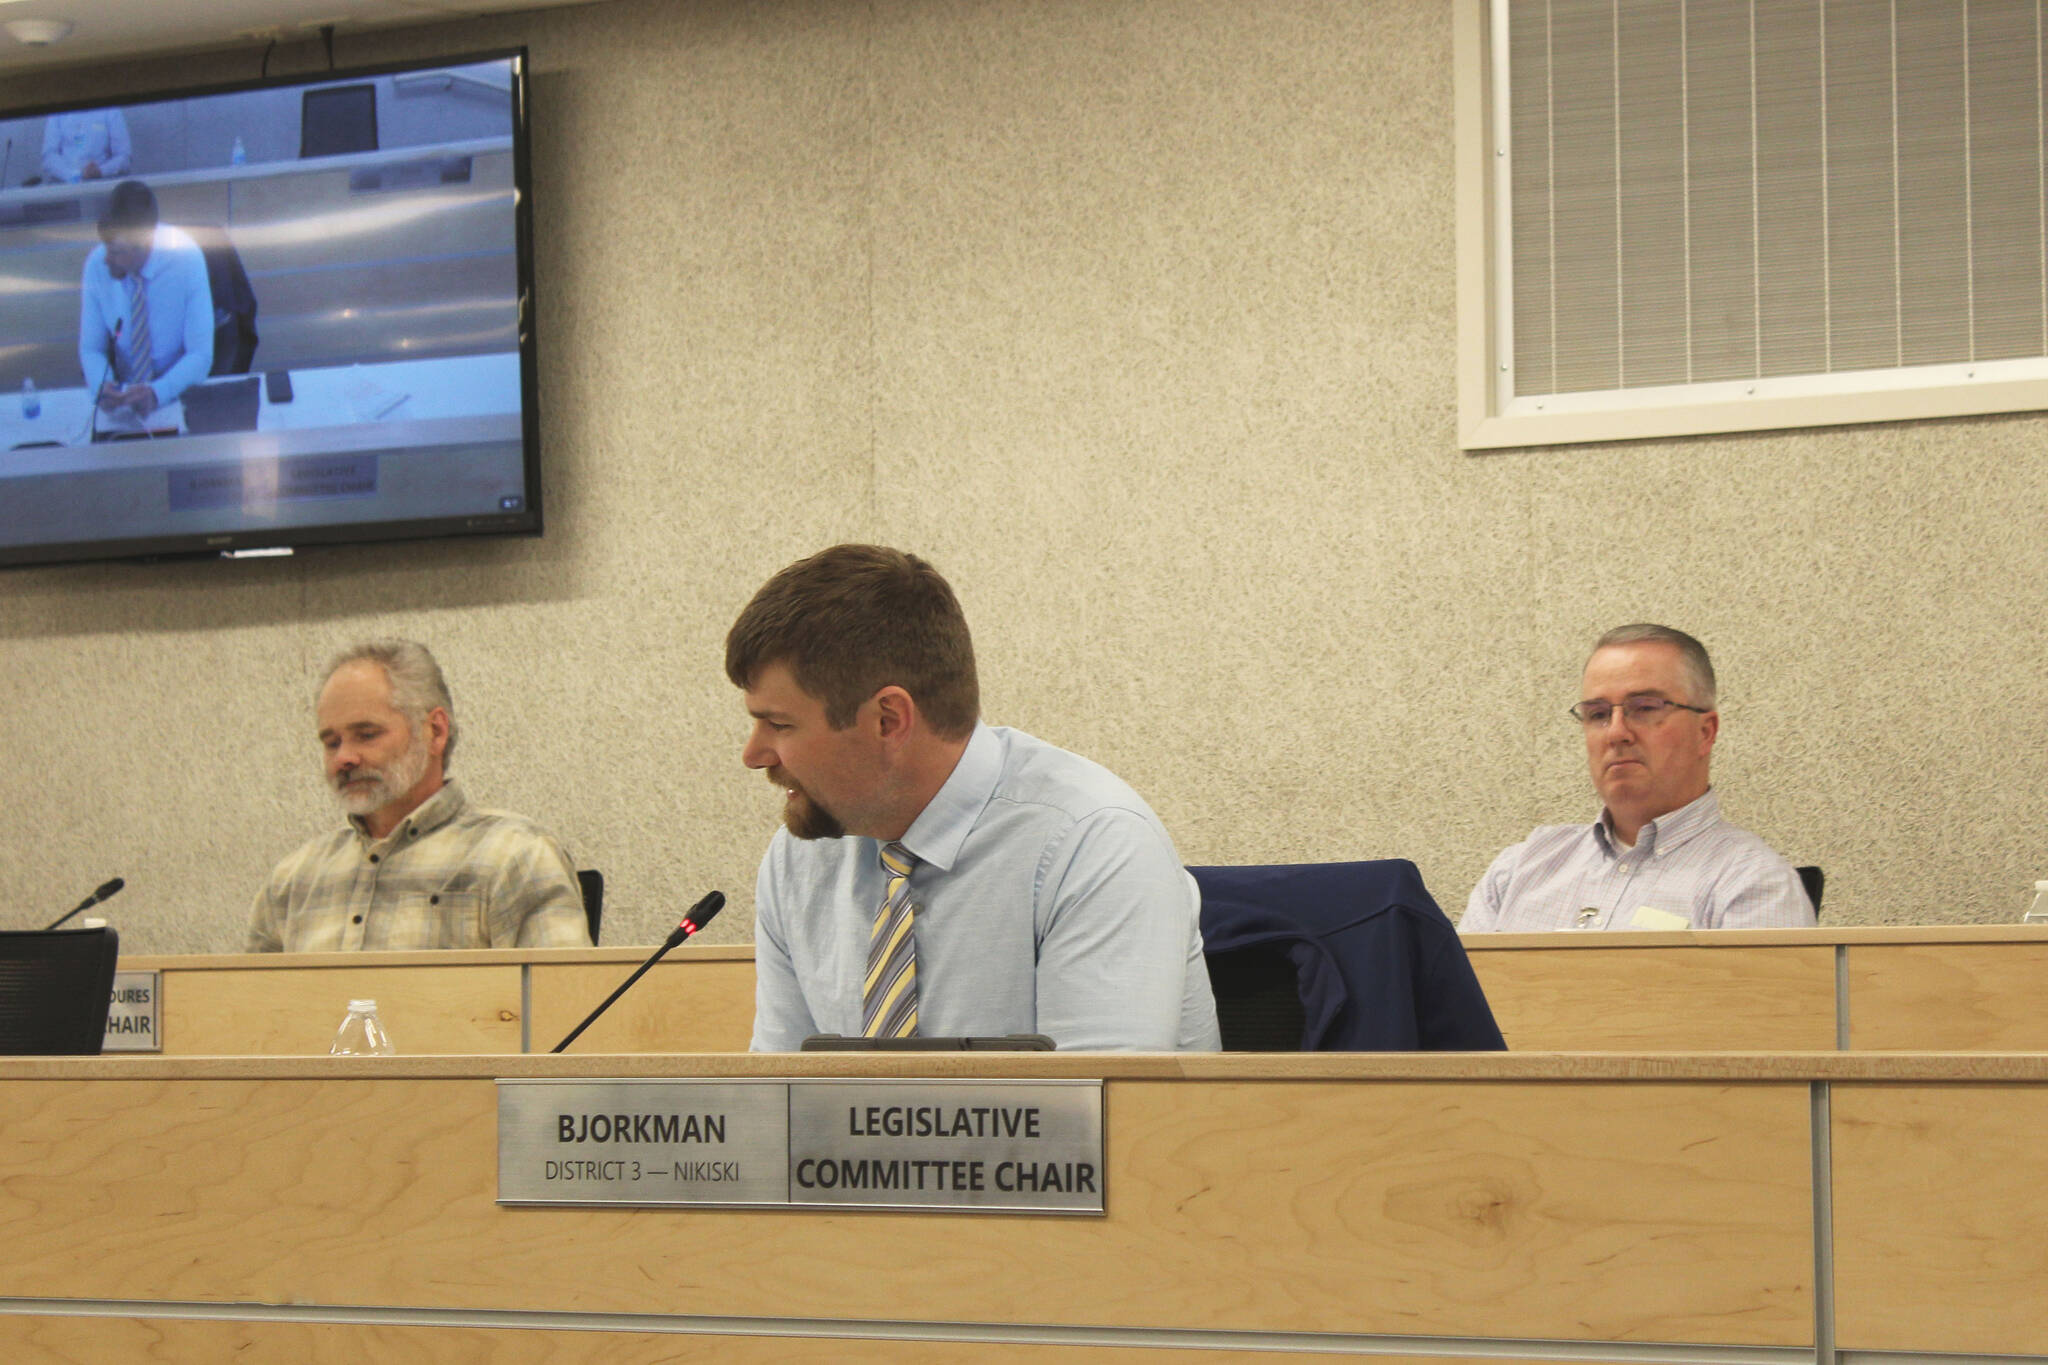 Kenai Peninsula Borough Assembly member Jesse Bjorkman (center) speaks while Aaron Rhoades (right) looks on during an assembly meeting on Tuesday, April 19, 2022, in Soldotna, Alaska. (Ashlyn O’Hara/Peninsula Clarion)